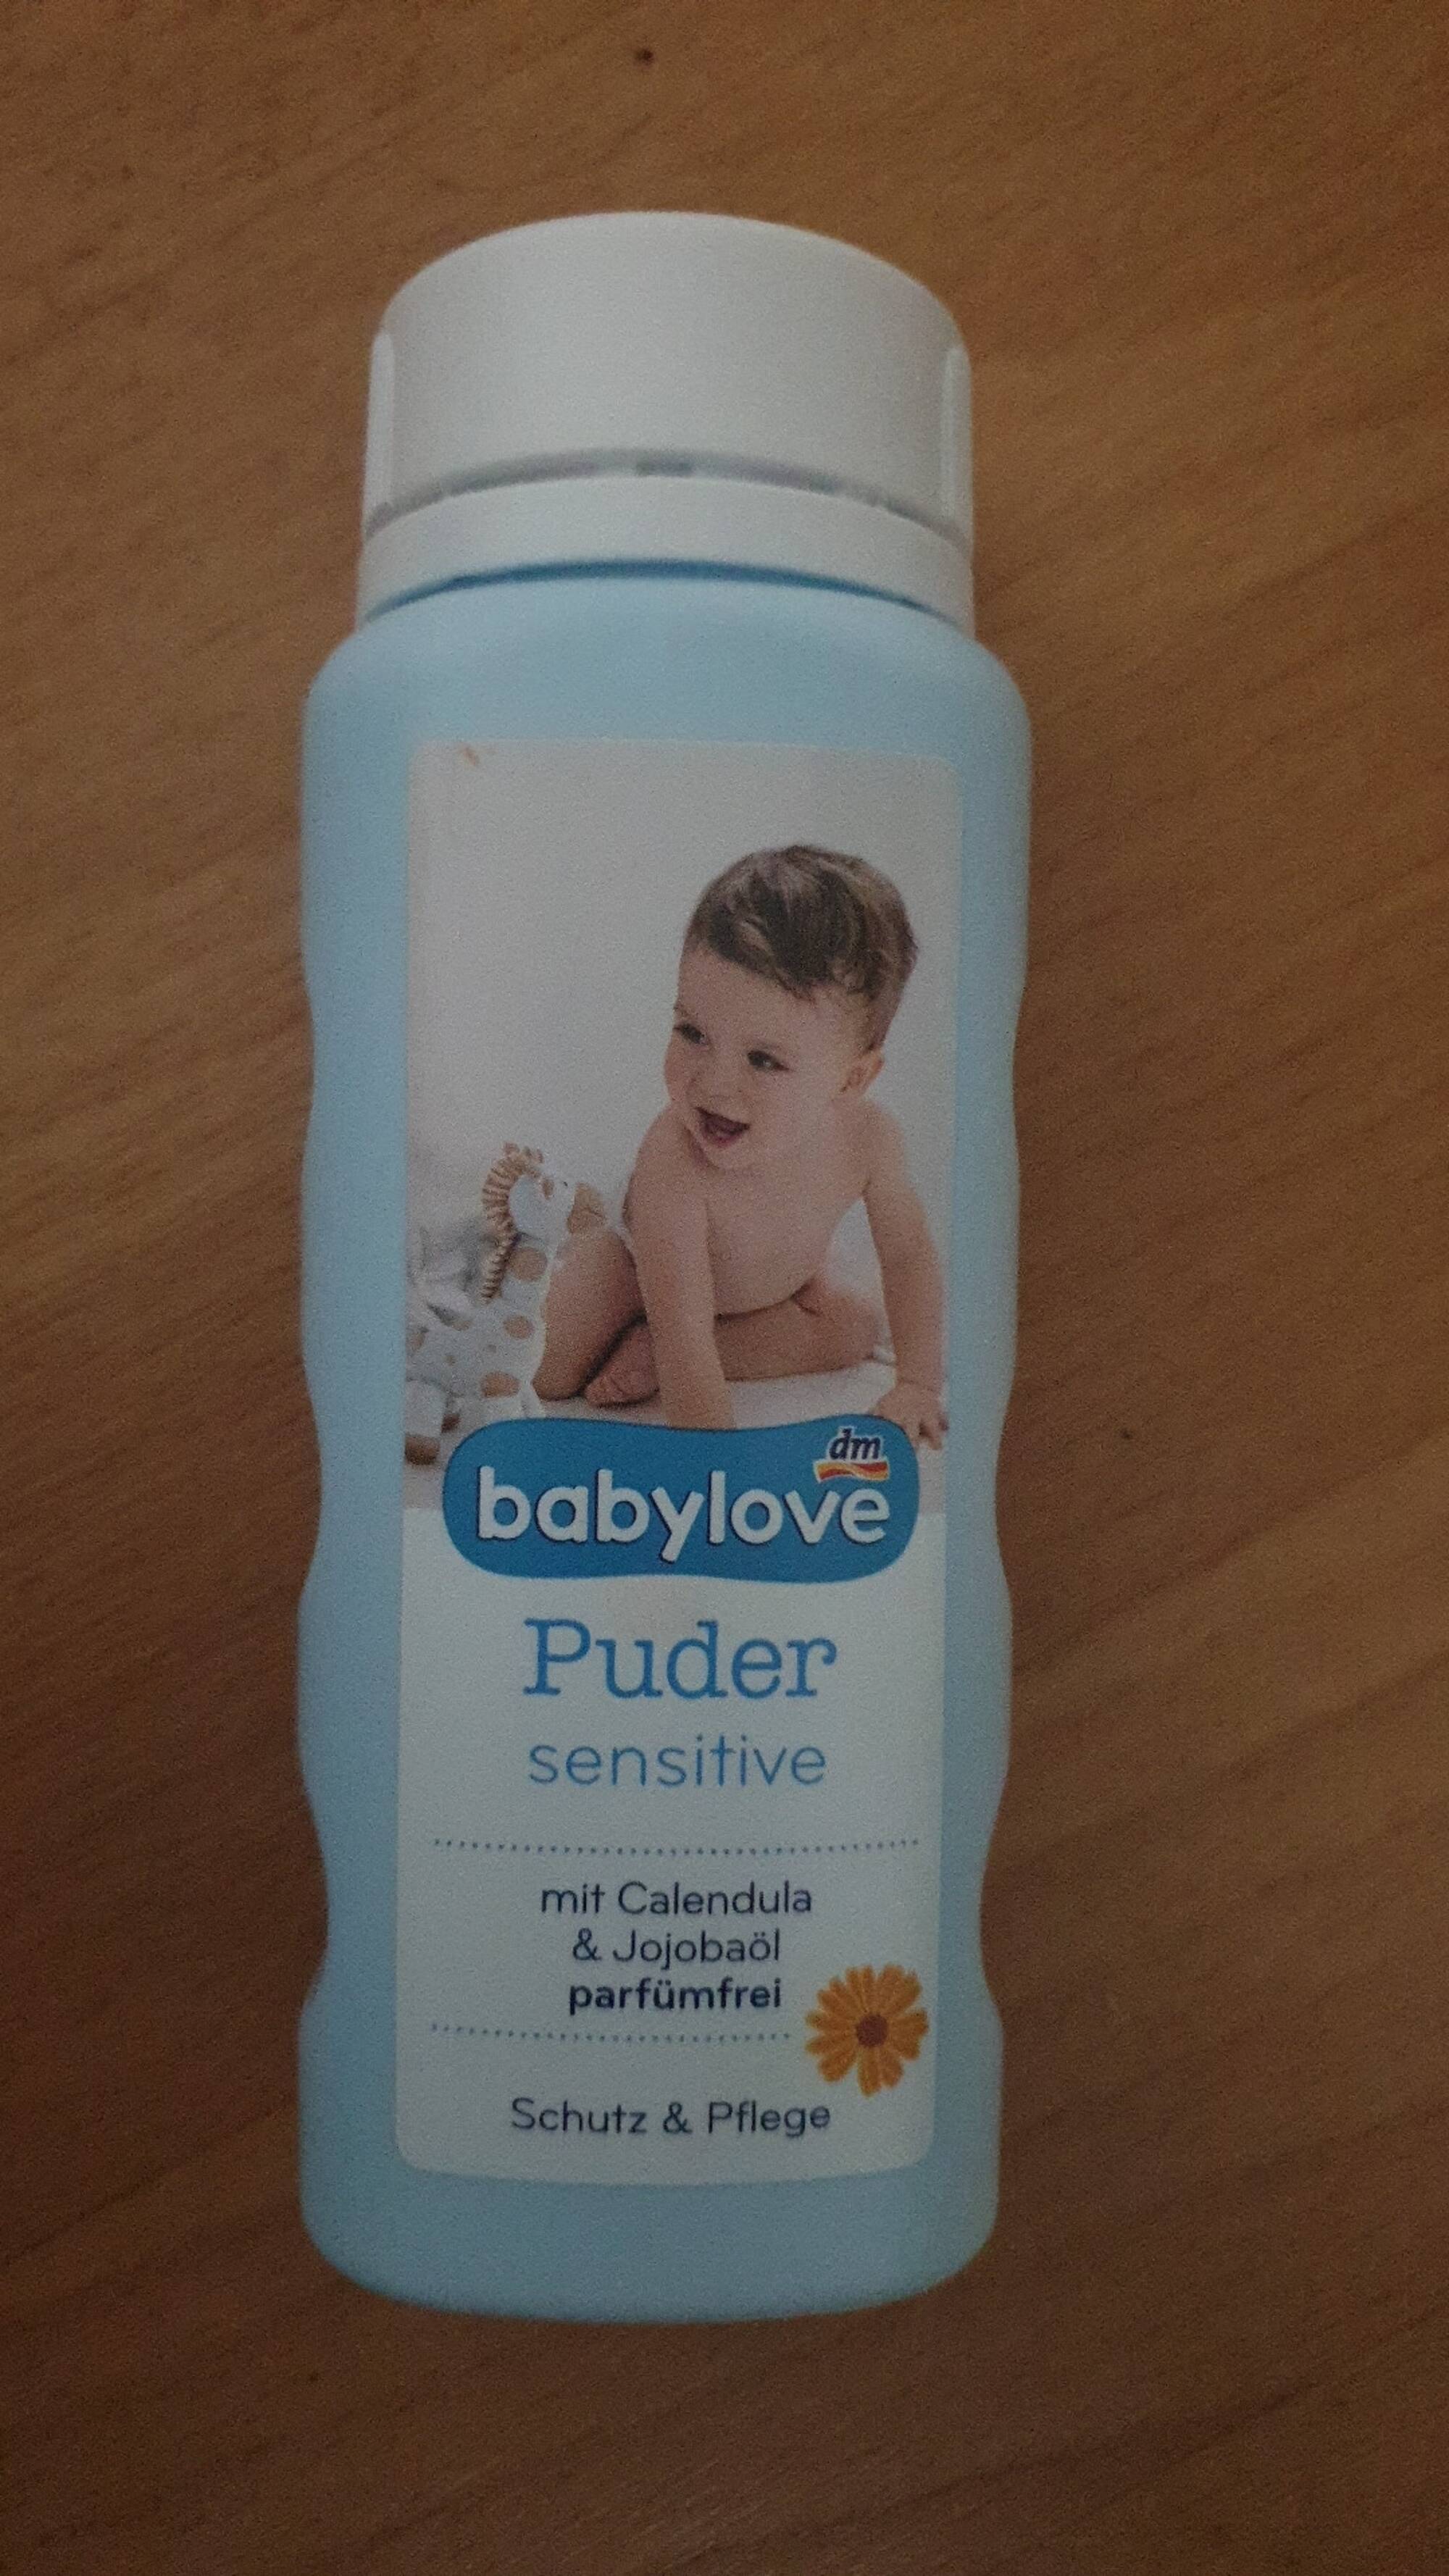 DM - Babylove - Puder sensitive mit calendula & jojobaöl